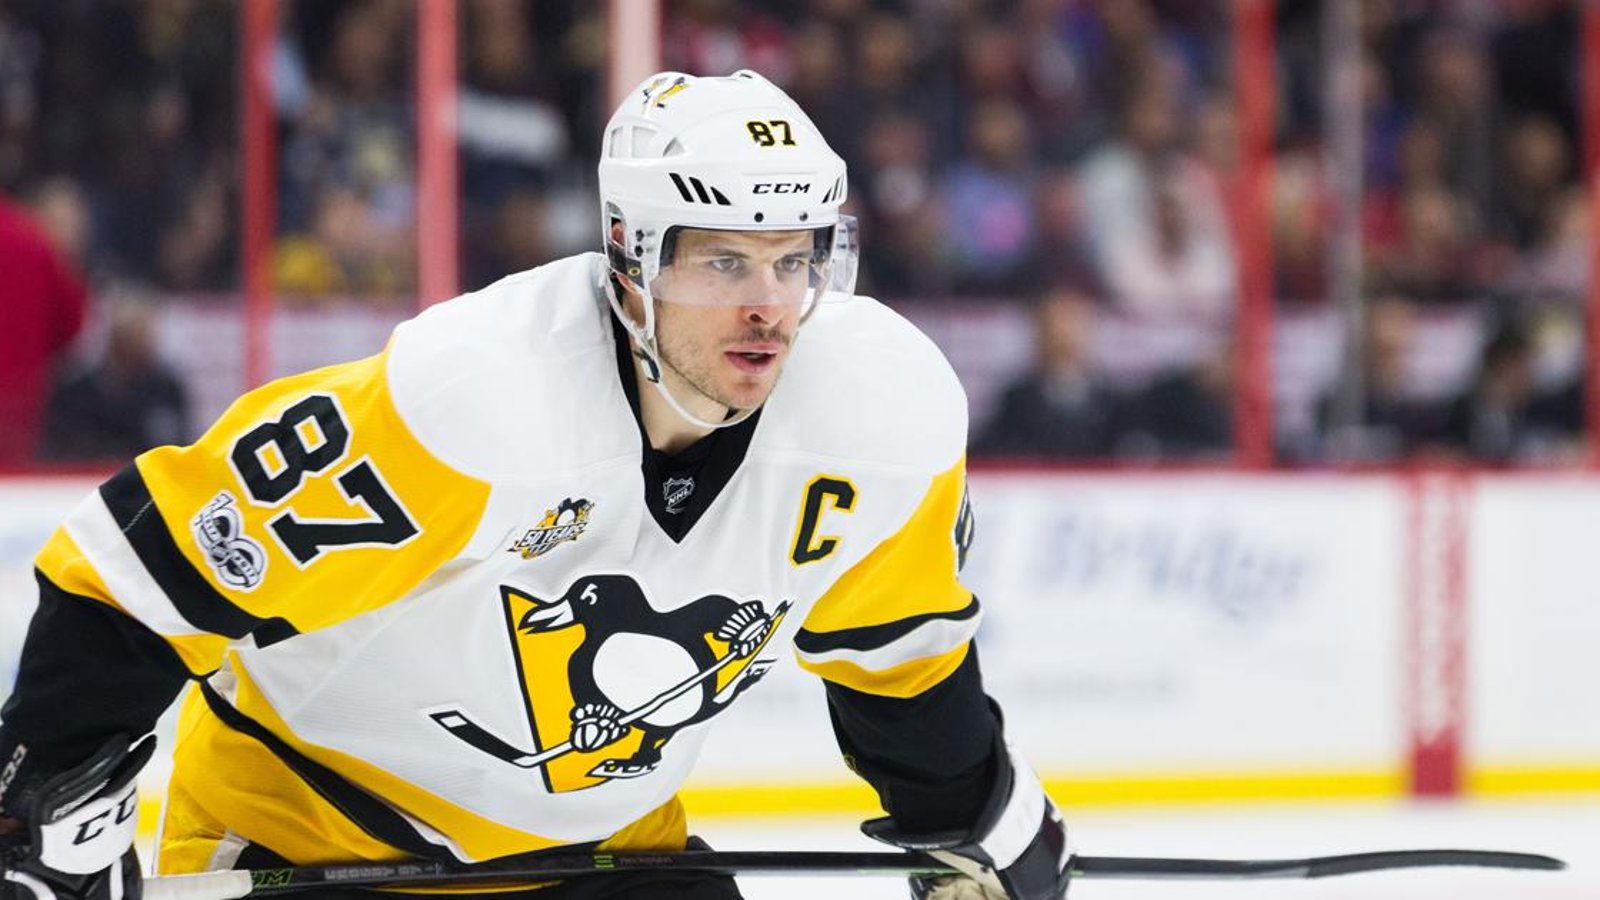 Crosby just surpassed legendary Penguins player! 